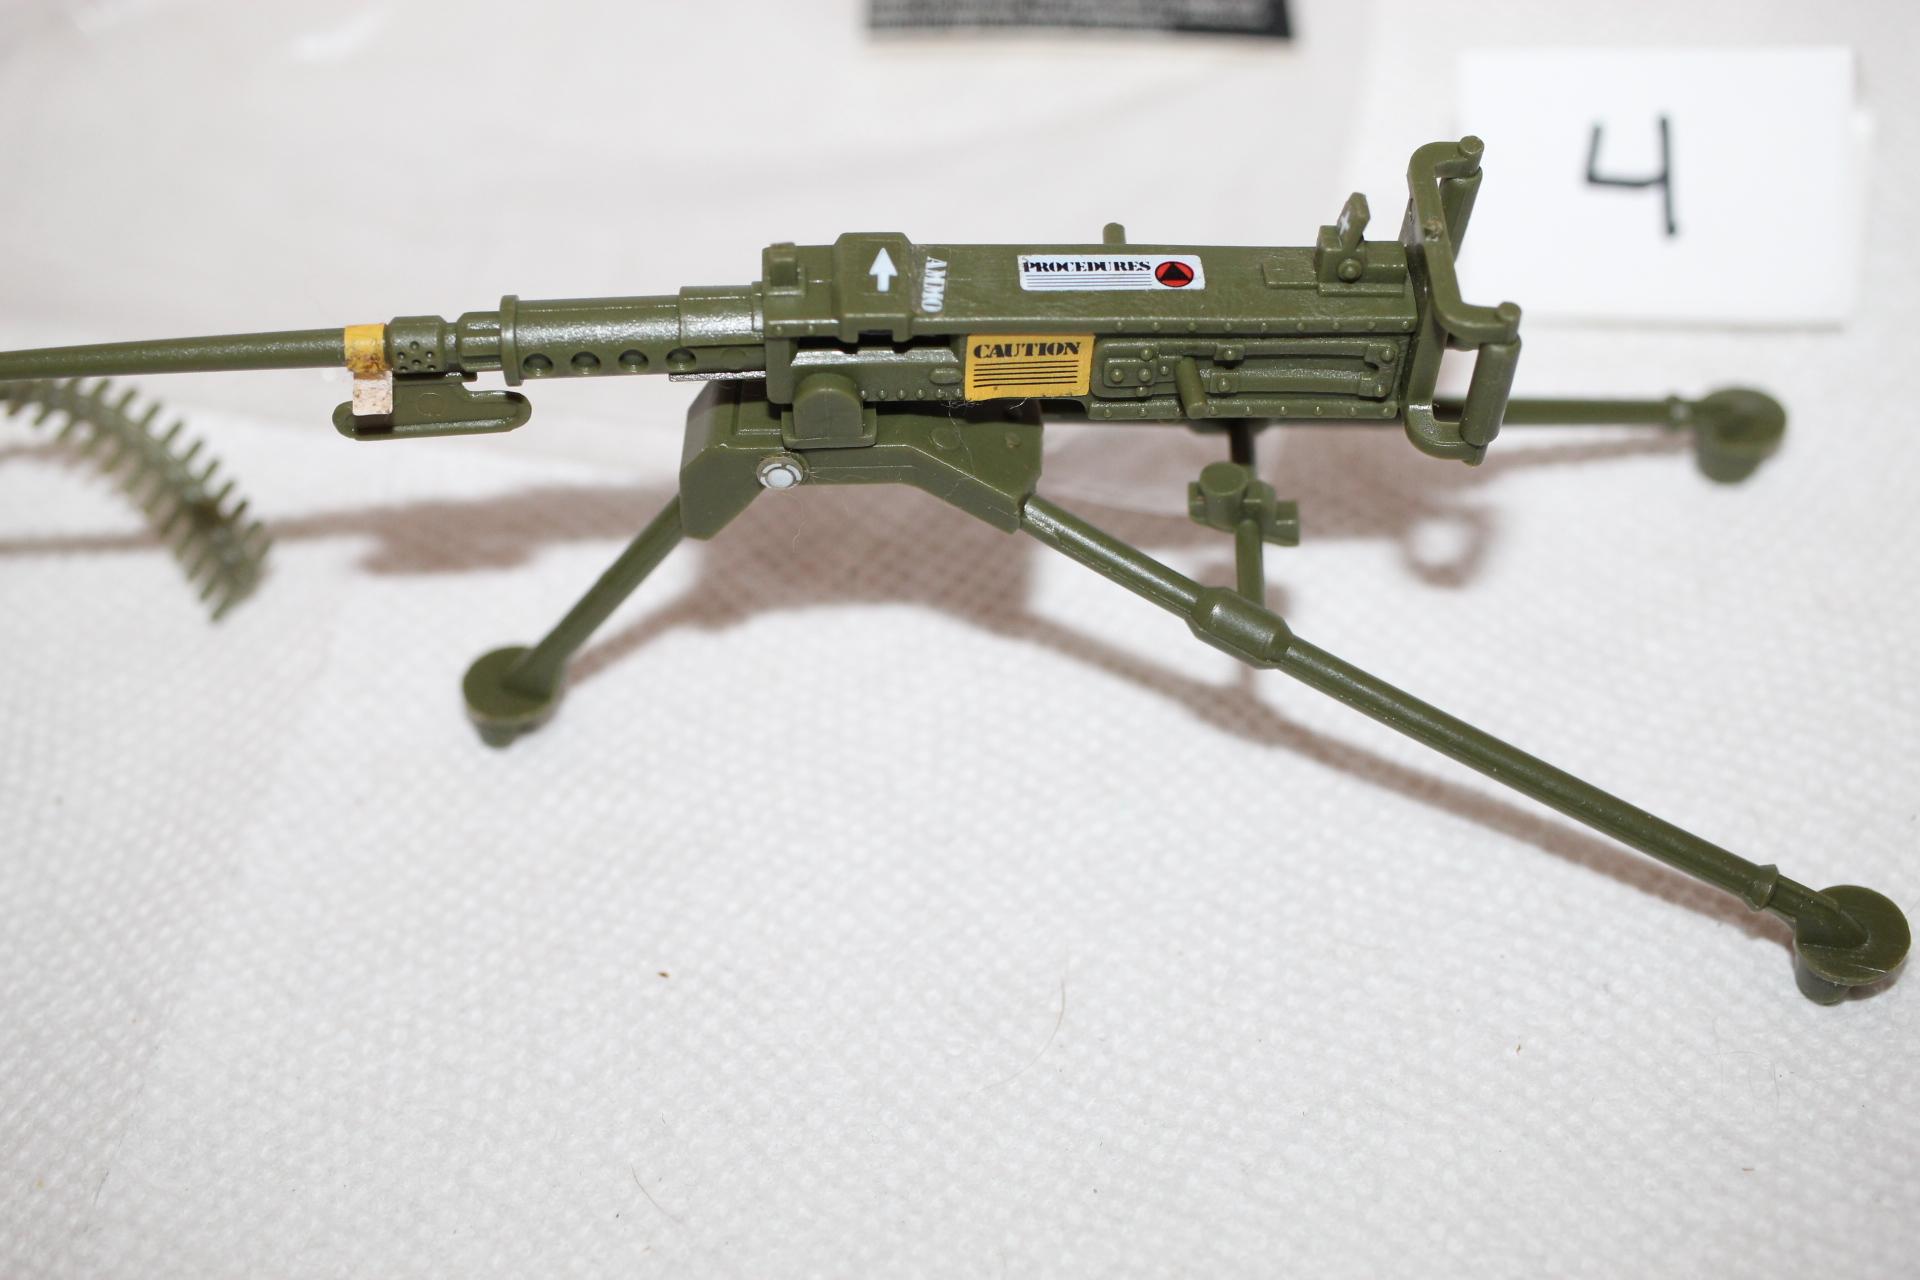 Vintage Rambo .50 Caliber Machine Gun Toy, Plastic, 7"L